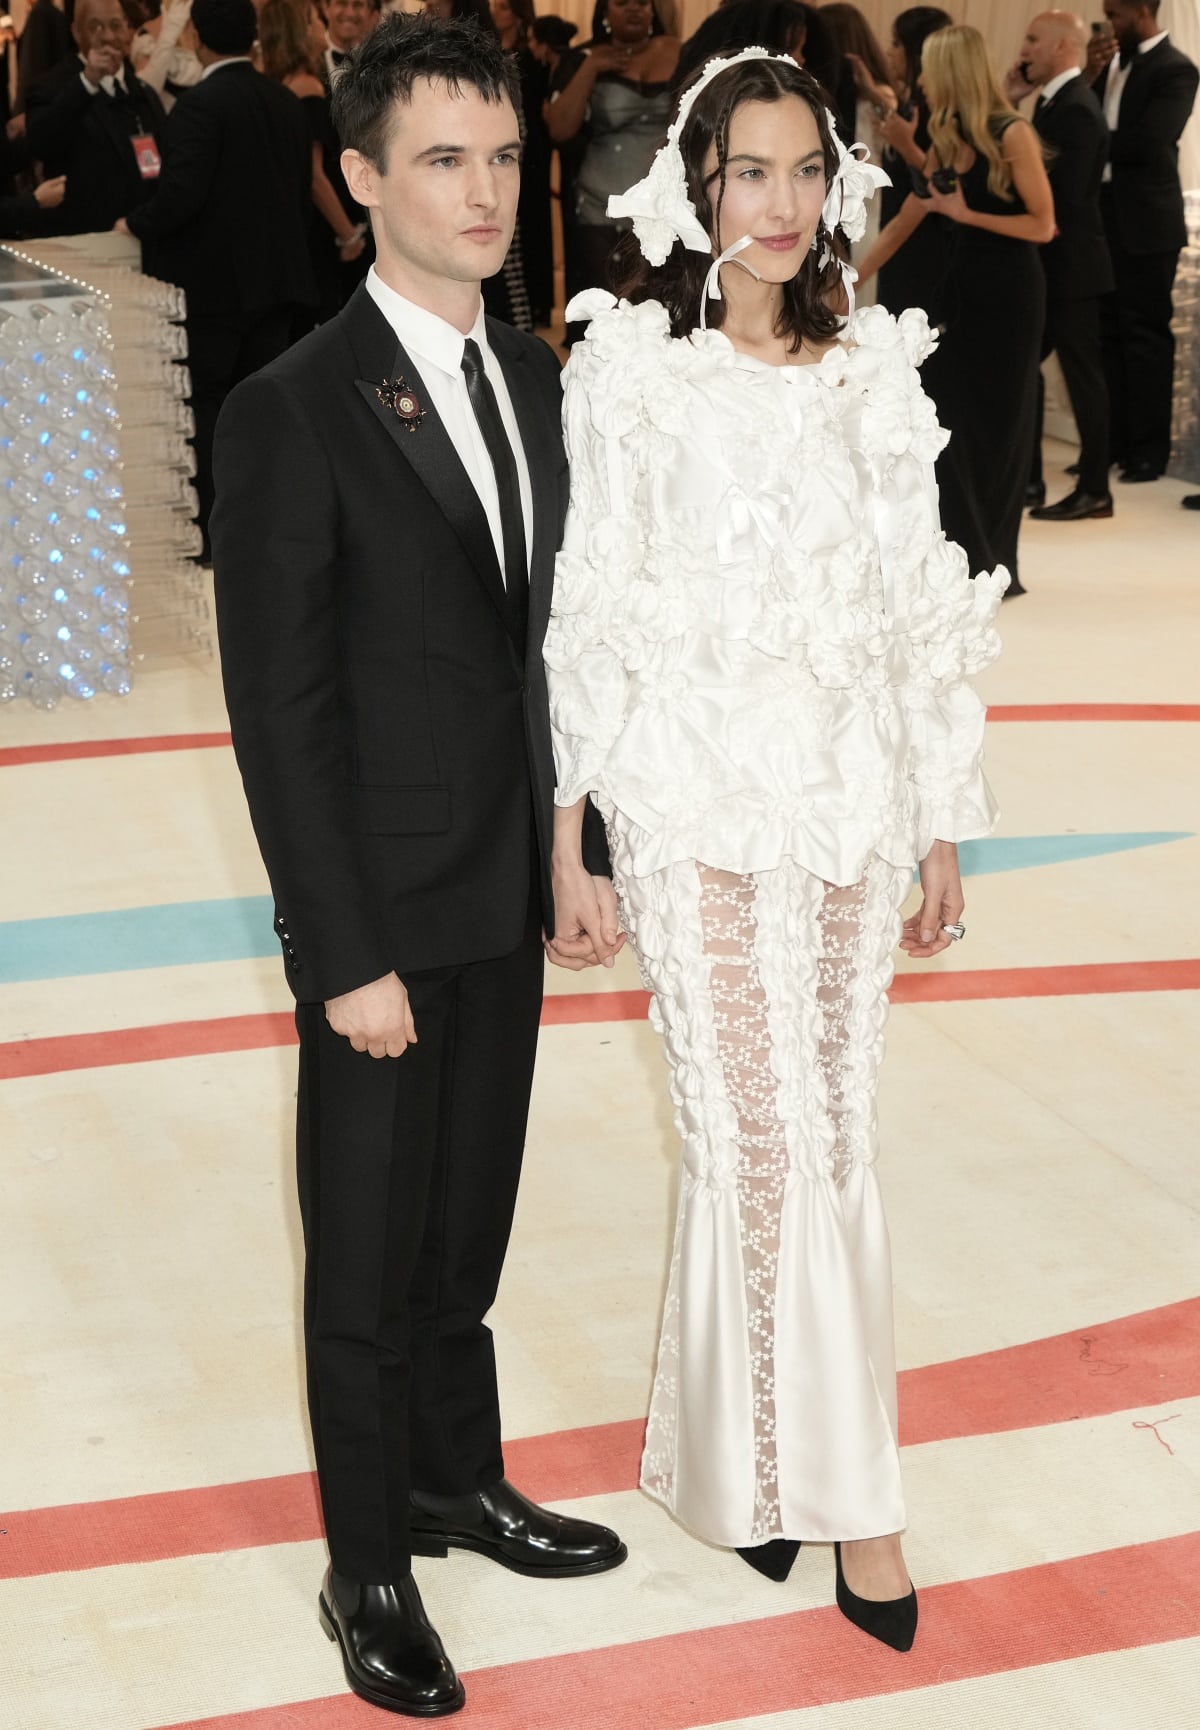 Alexa Chung with rumored fiancé Tom Sturridge at the 2023 Met Gala